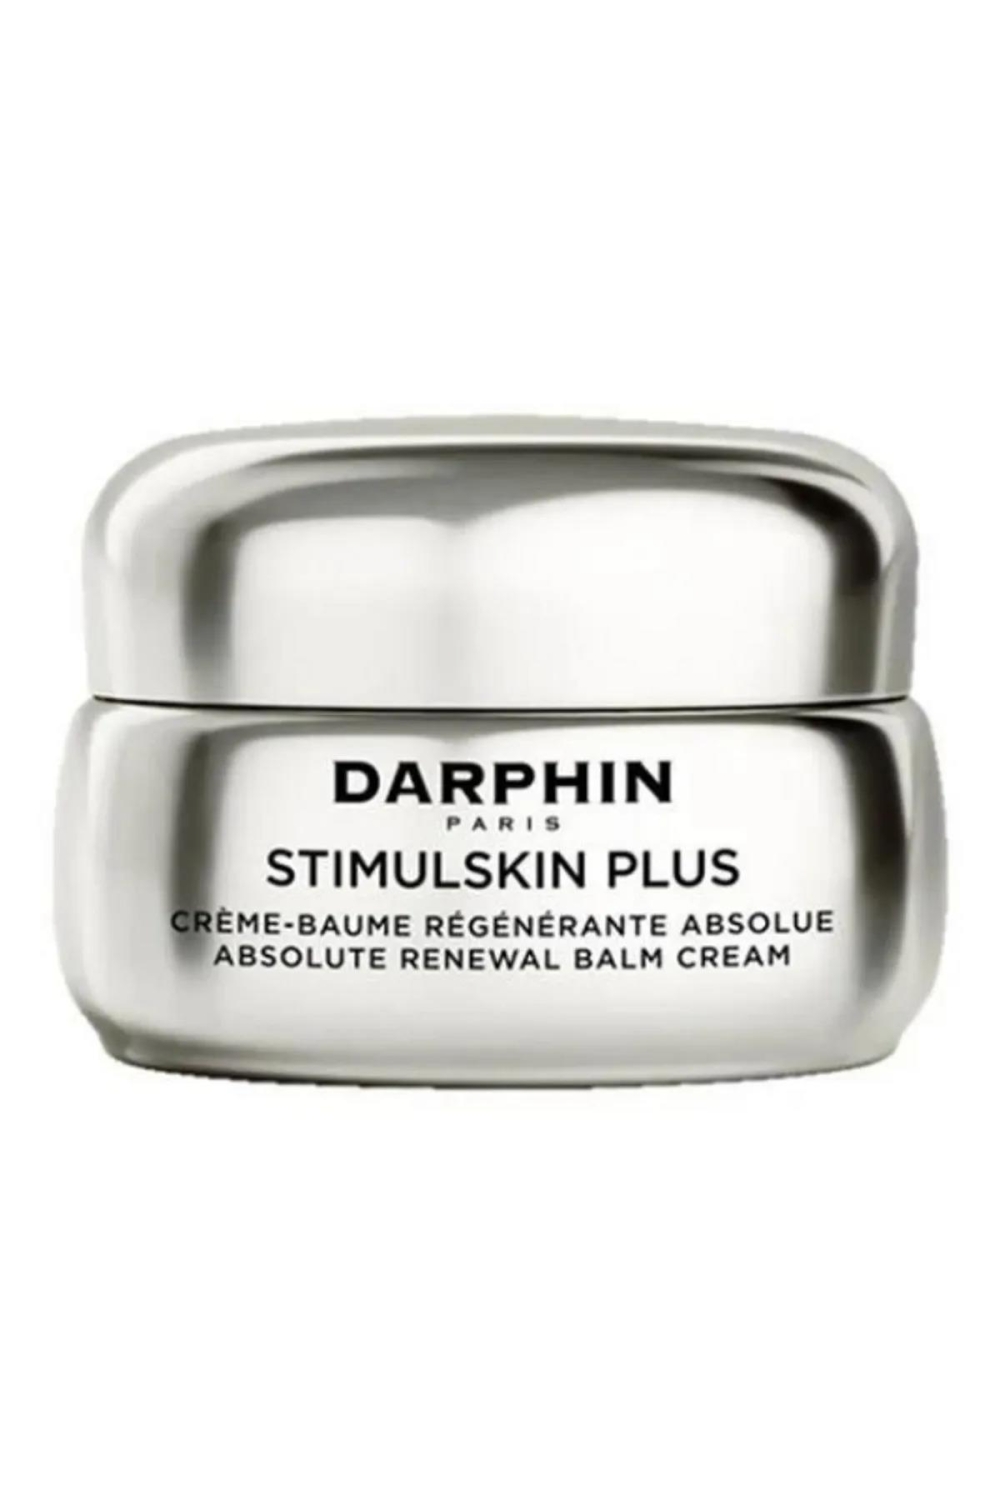 Darphin Stimulskin Plus Absolute Renewal Balm Cream 50 ml - 1